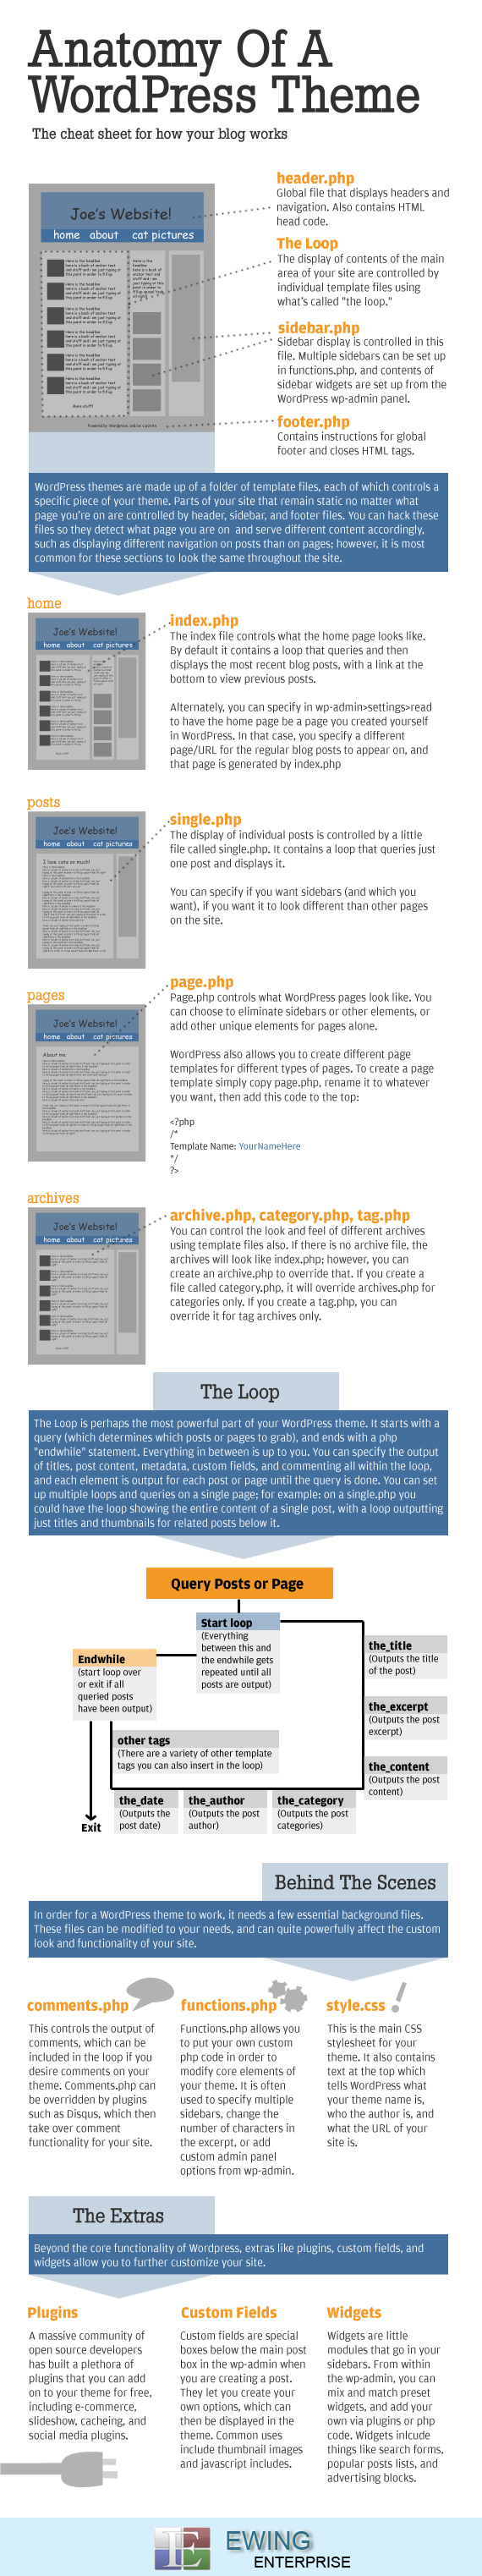 wordpress tips wordpress themes